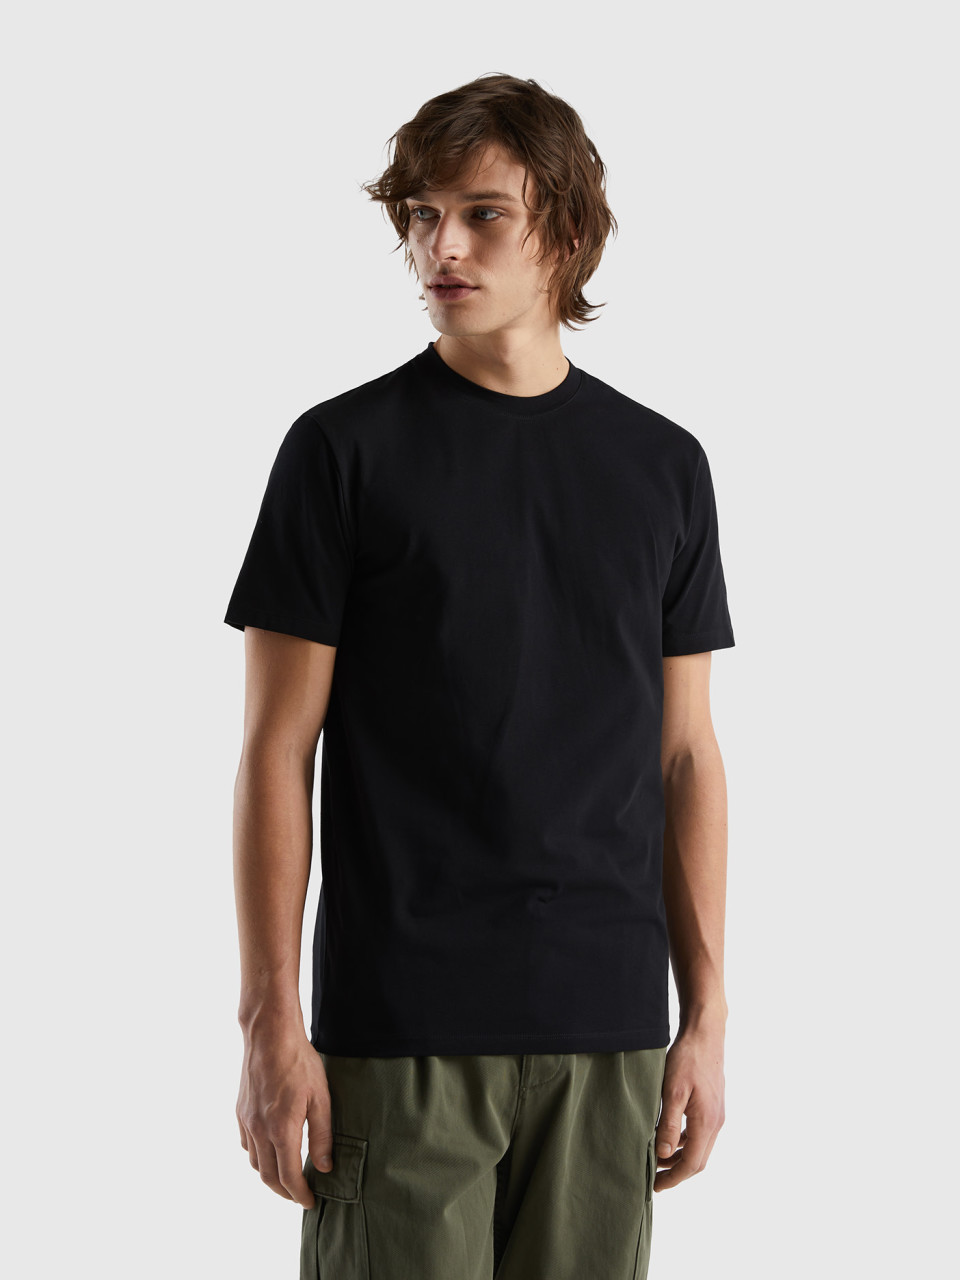 Benetton, Slim Fit T-shirt In Stretch Cotton, Black, Men